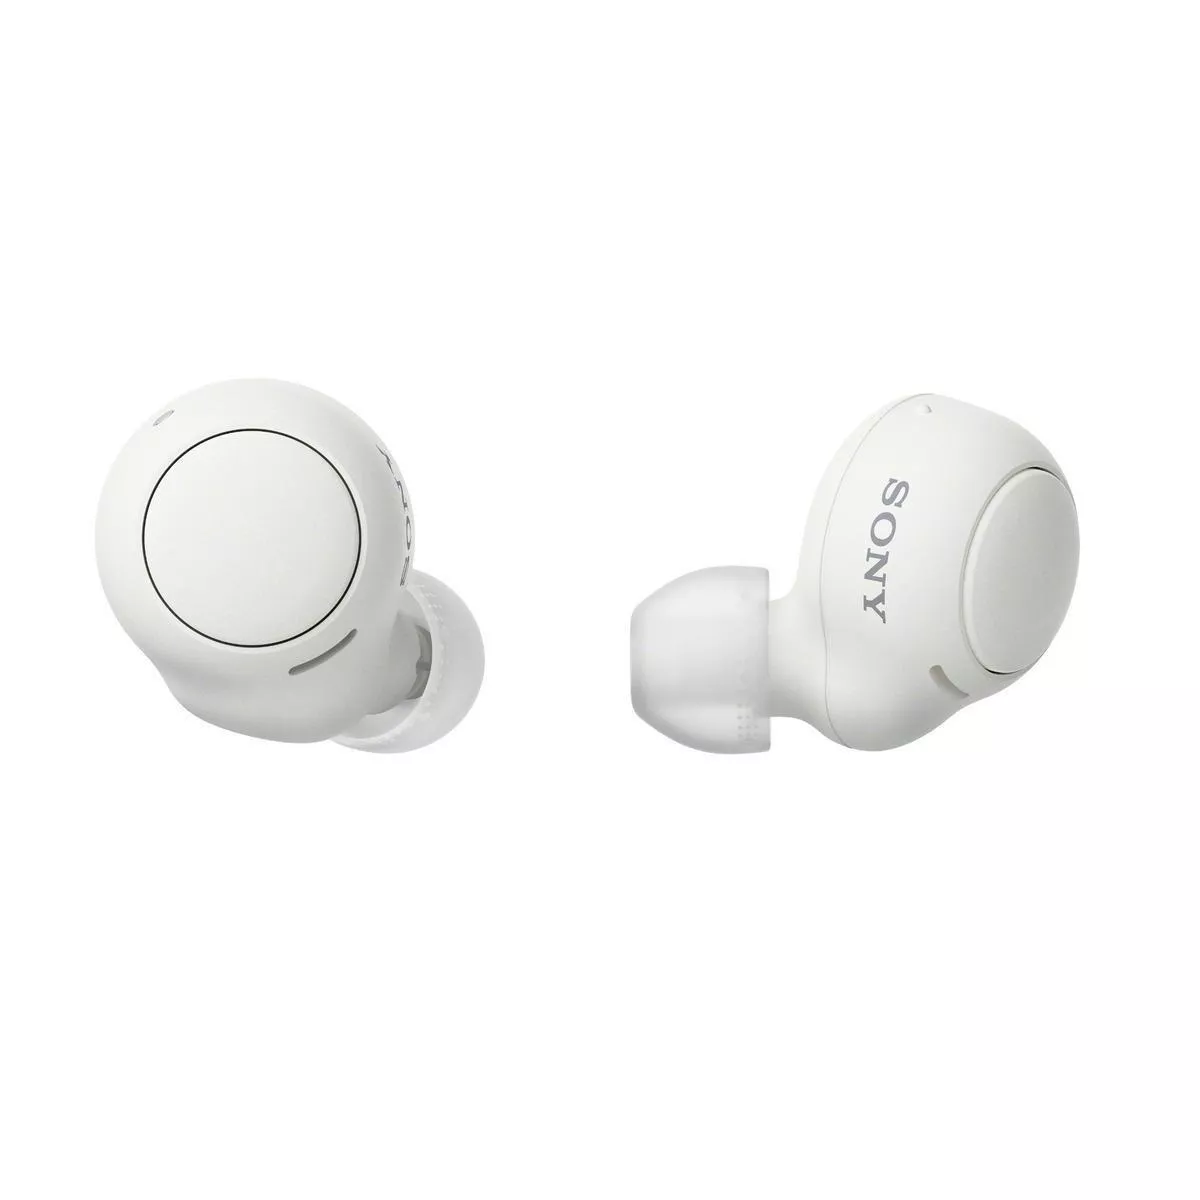 Audífonos In-ear Inalámbricos Sony Wf-c500 Blanco